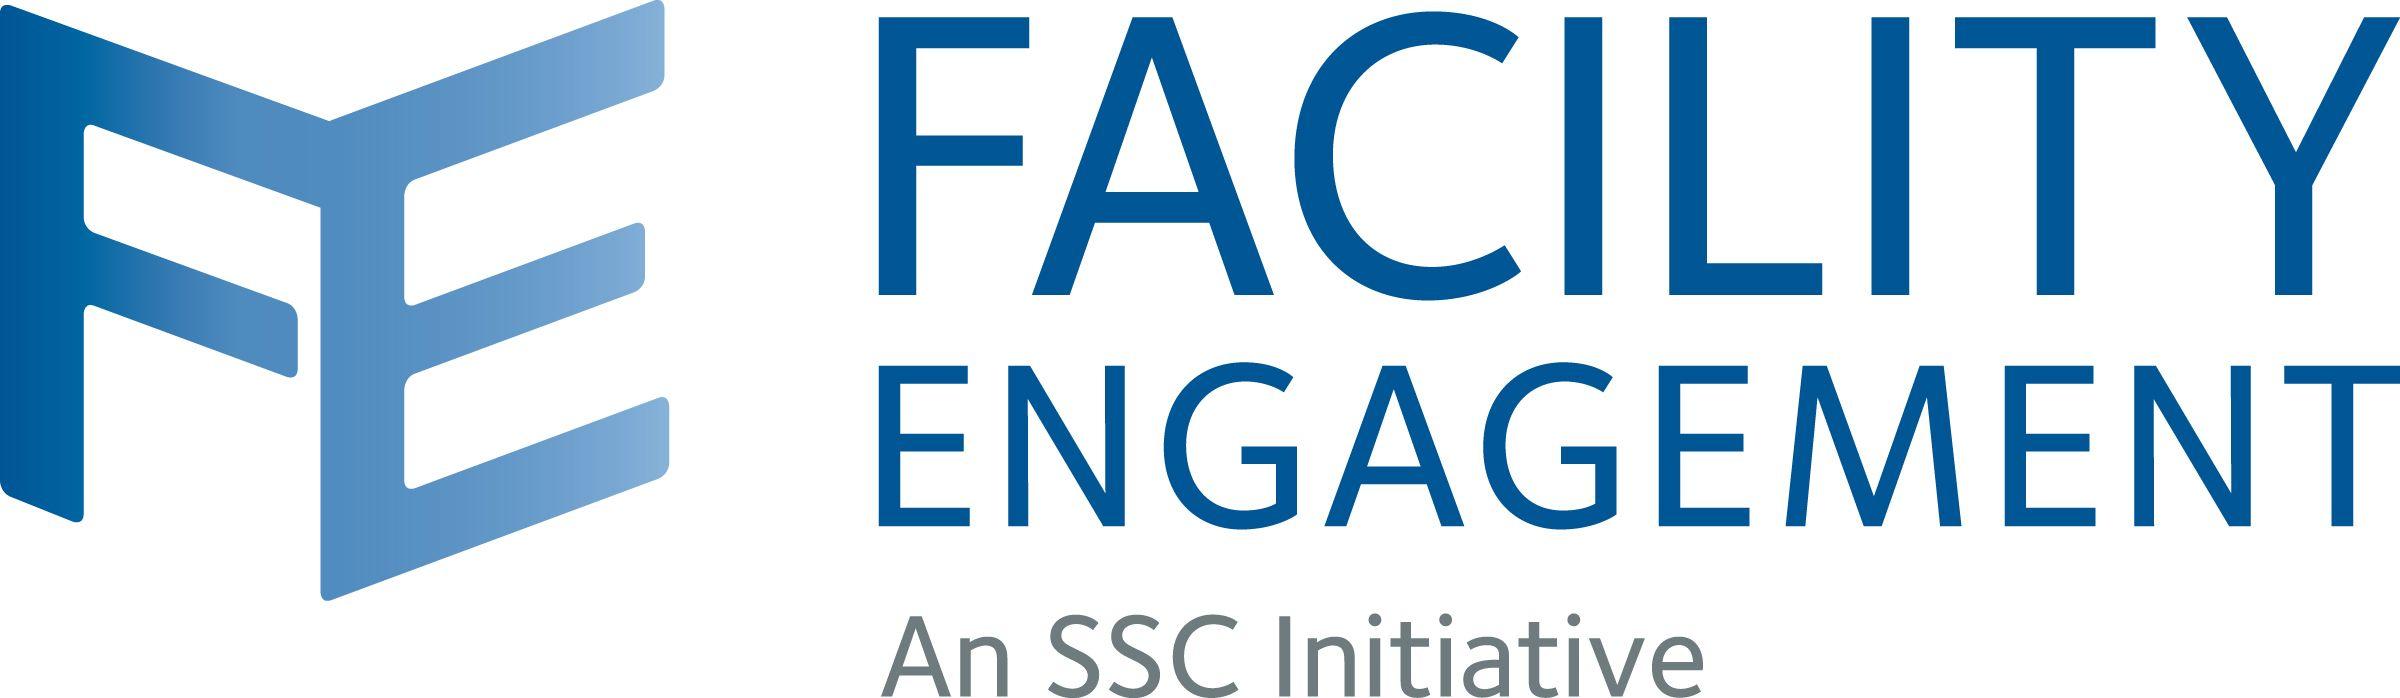 Engagement Logo - Engagement and Communications | SSC Facility Engagement